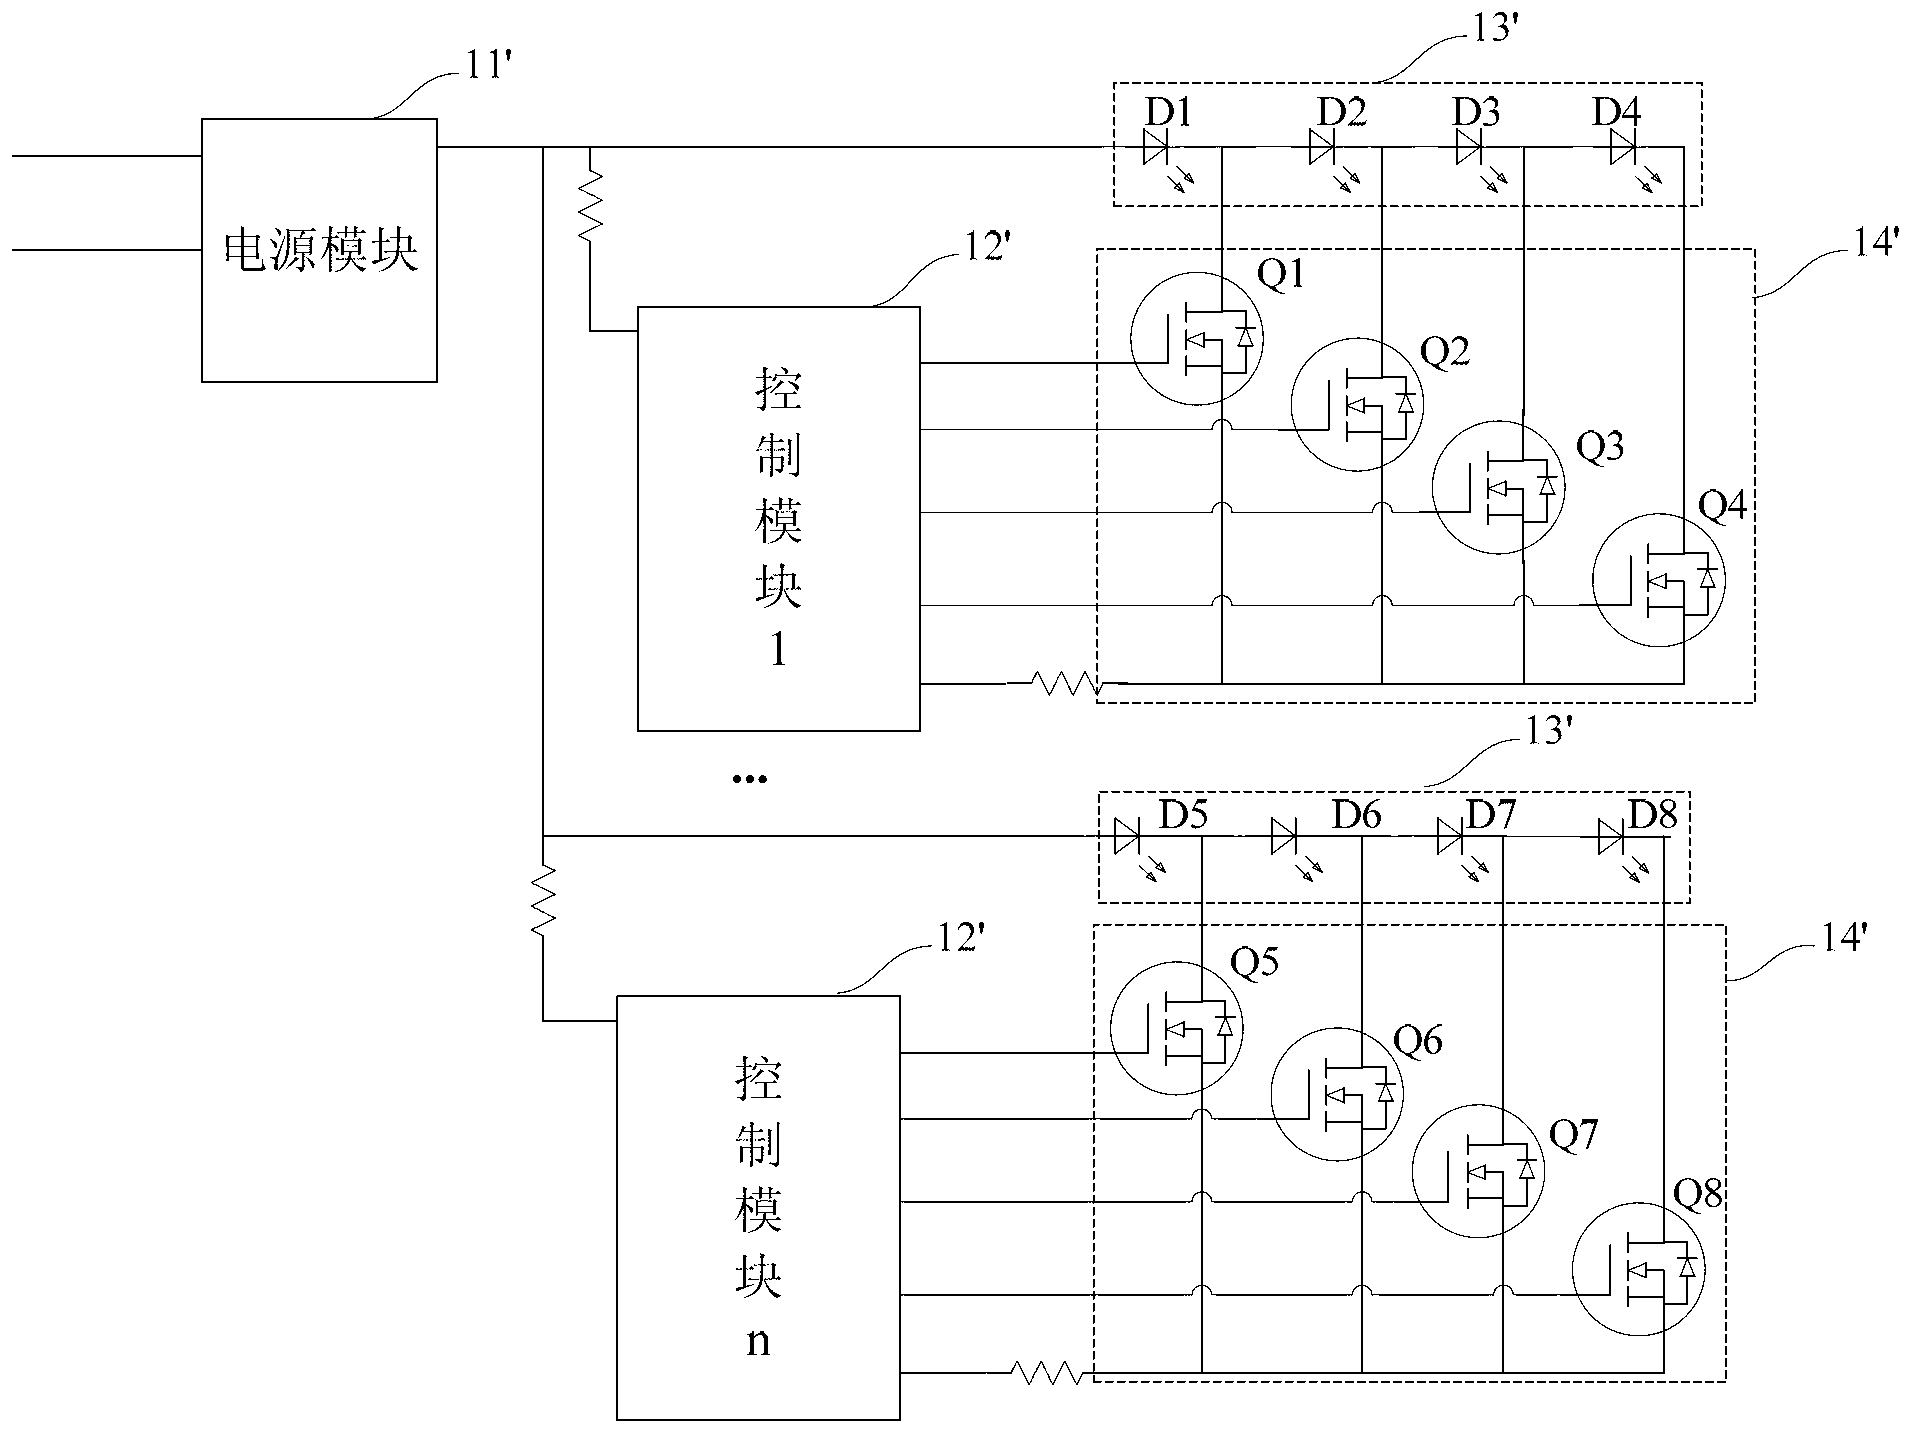 Multi-segment-type cascading driving circuit